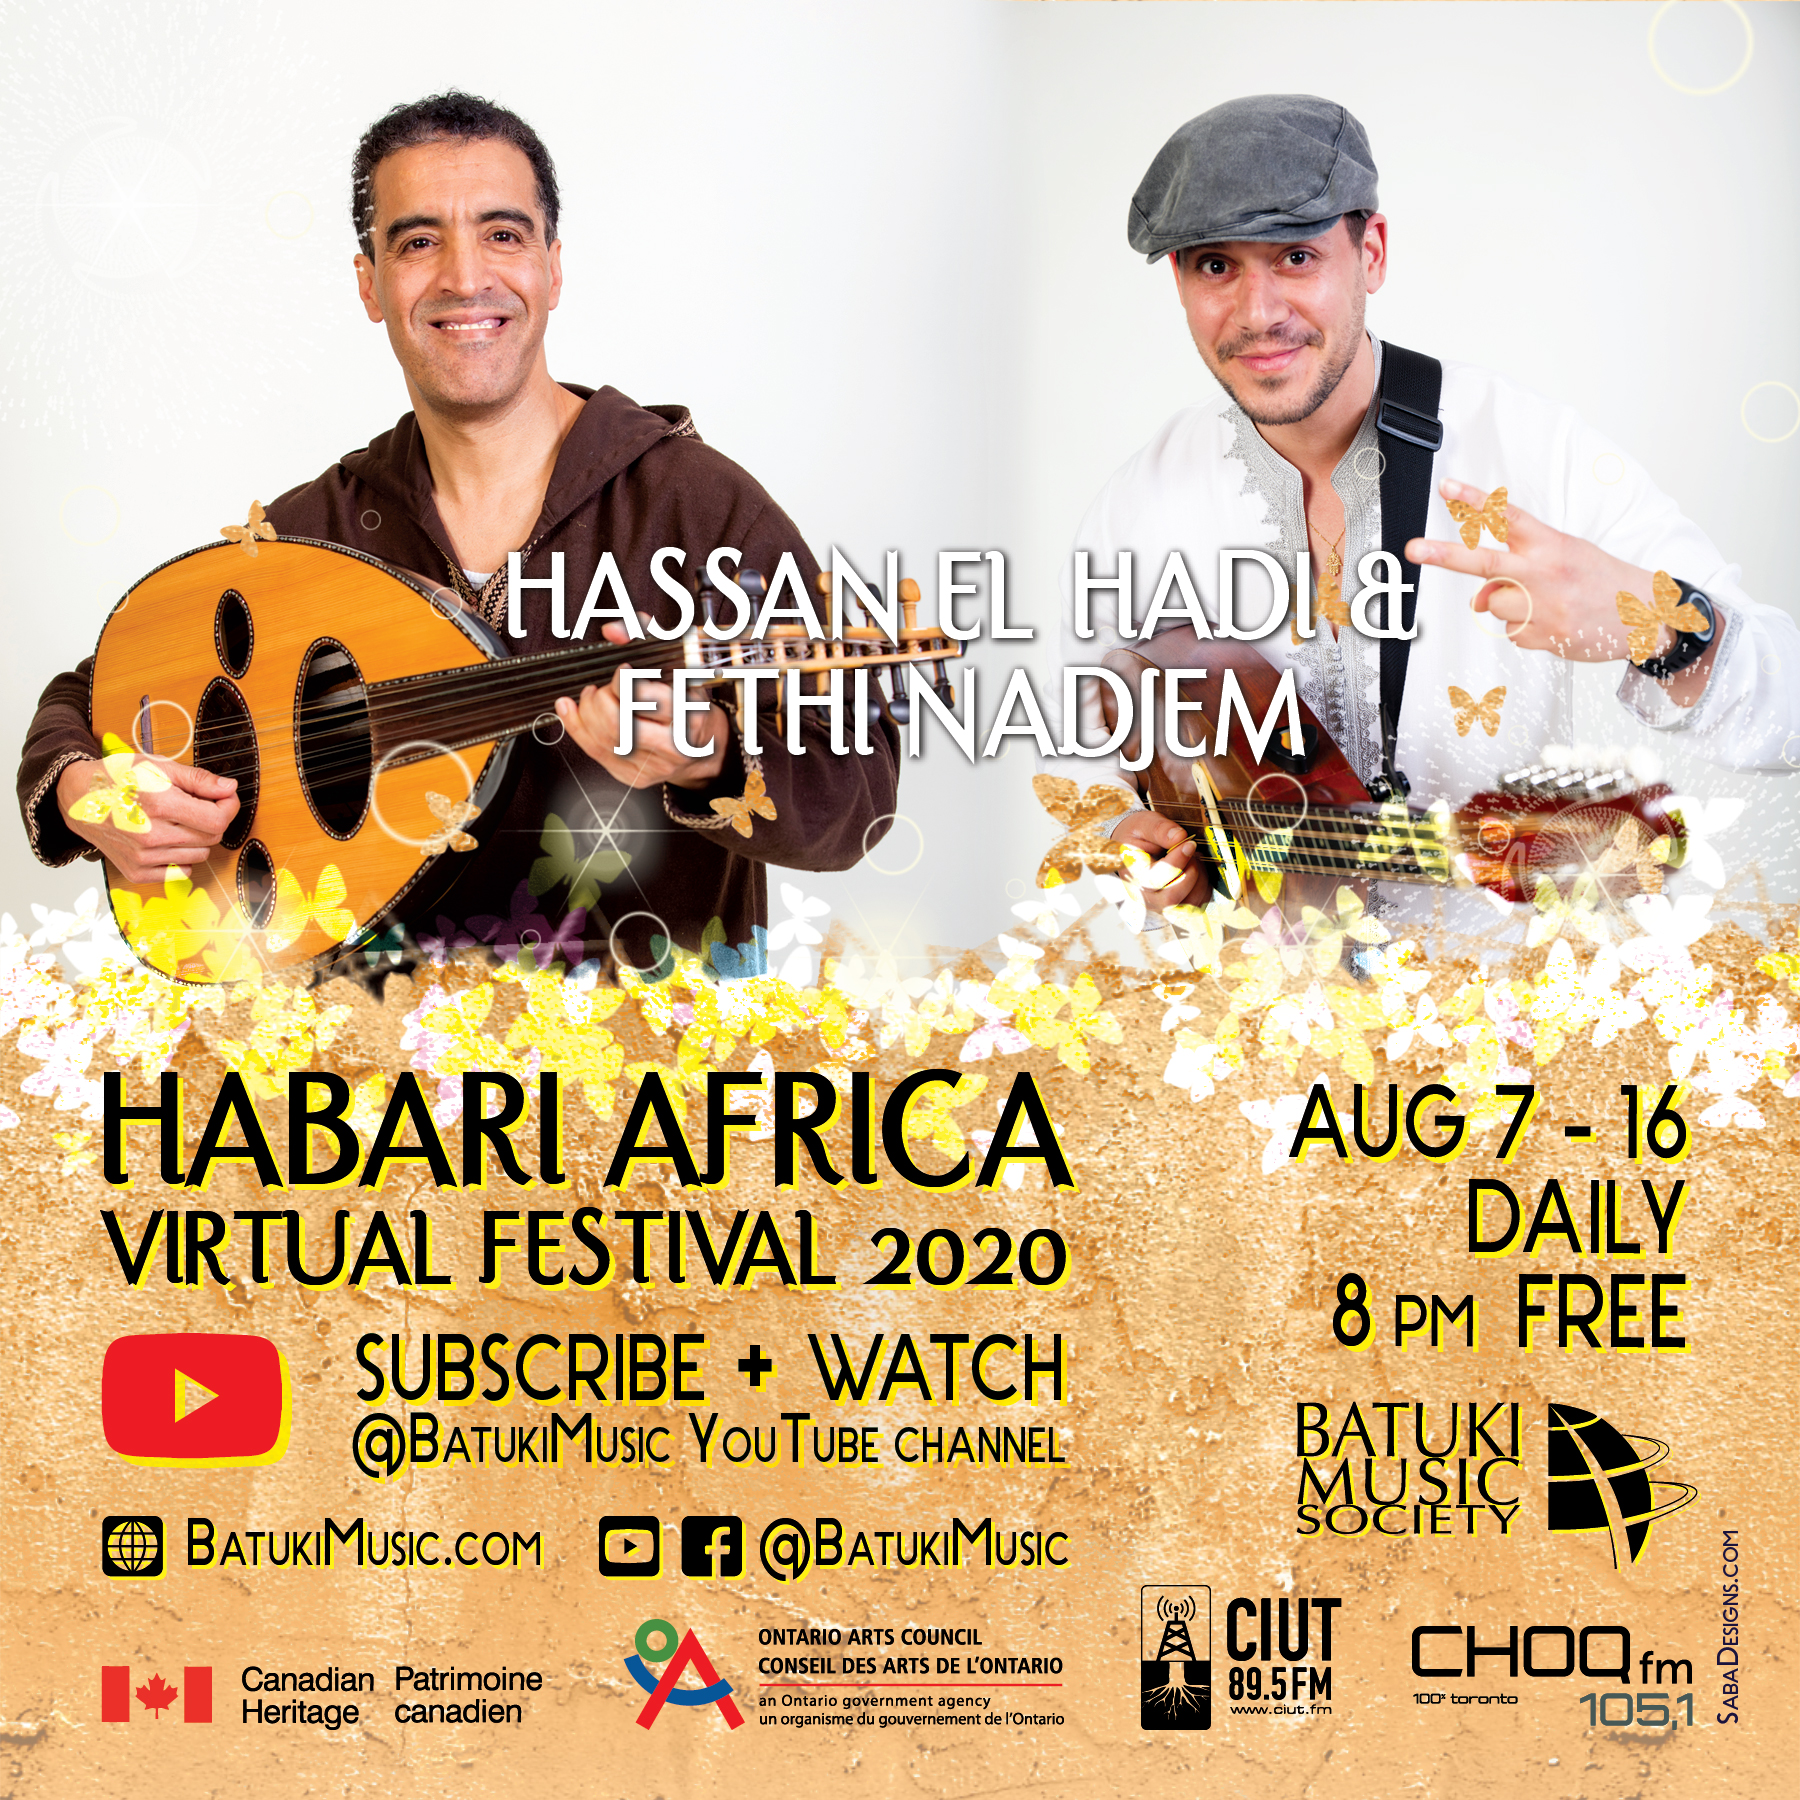 Habari Africa Virtual Festival 2020 : Hassan El Hadi & Fethi Nadjem